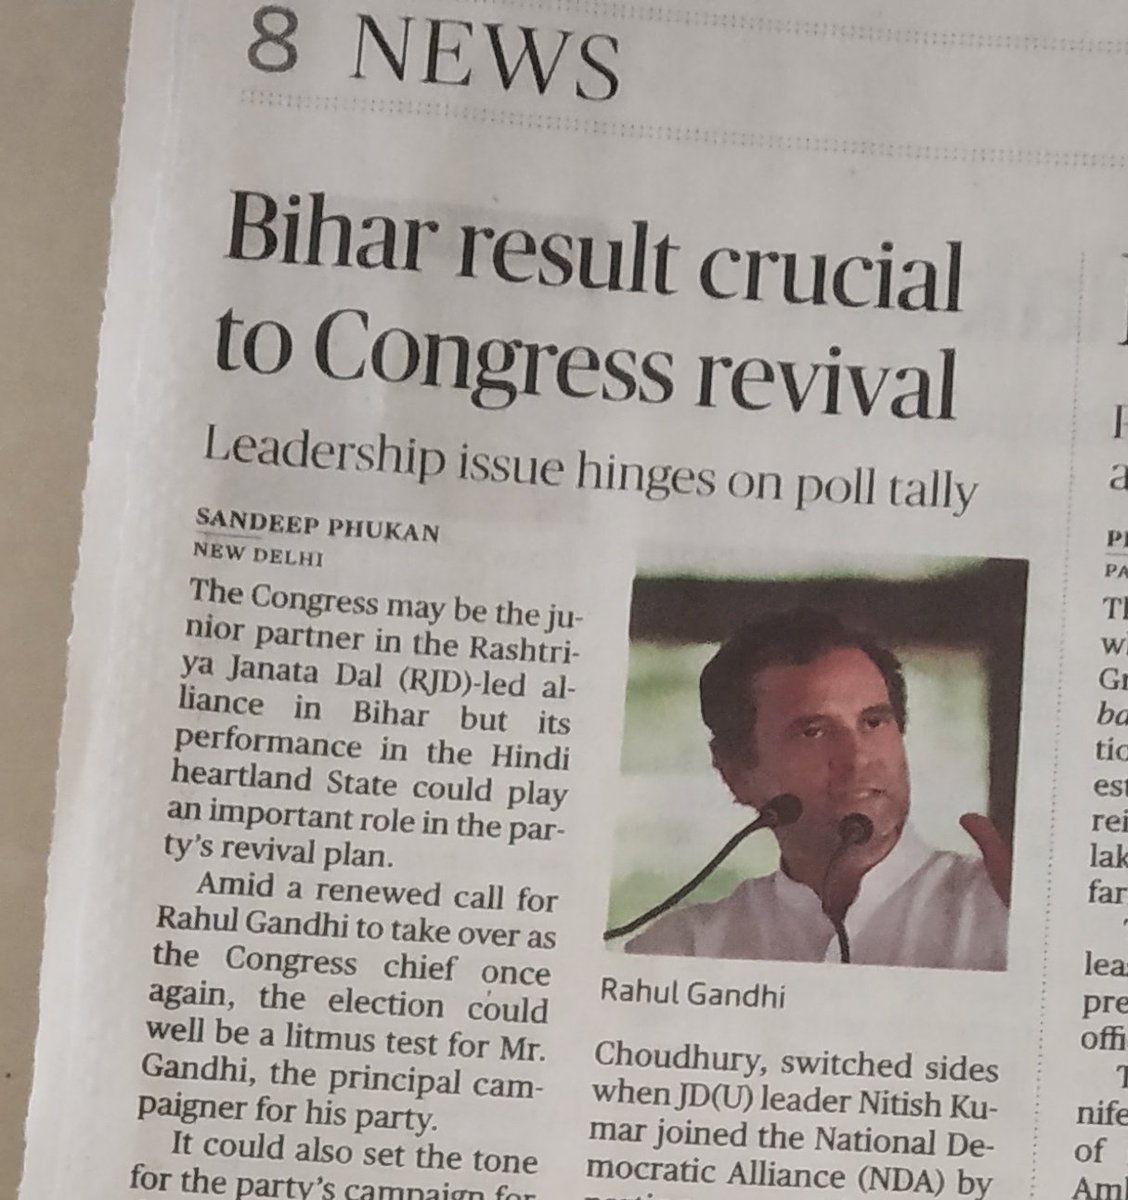 "Bihar result crucial to Congress revival".